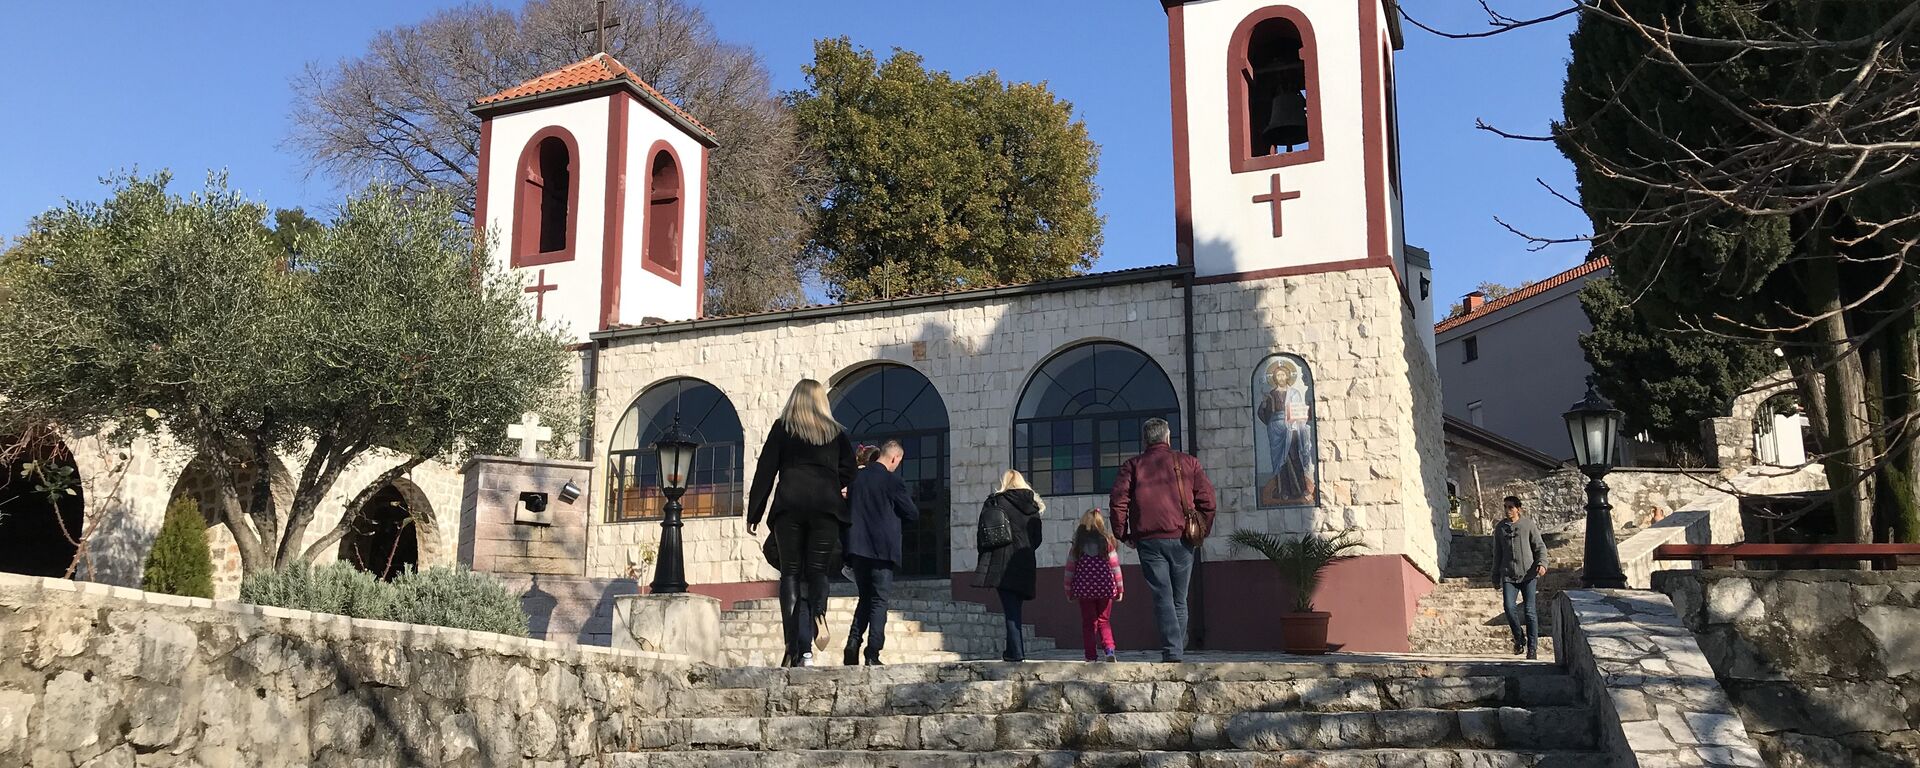 Manastir Dajbabe u blizini sela po kome je dobio ime, kod Podgorice - Sputnik Srbija, 1920, 21.10.2022